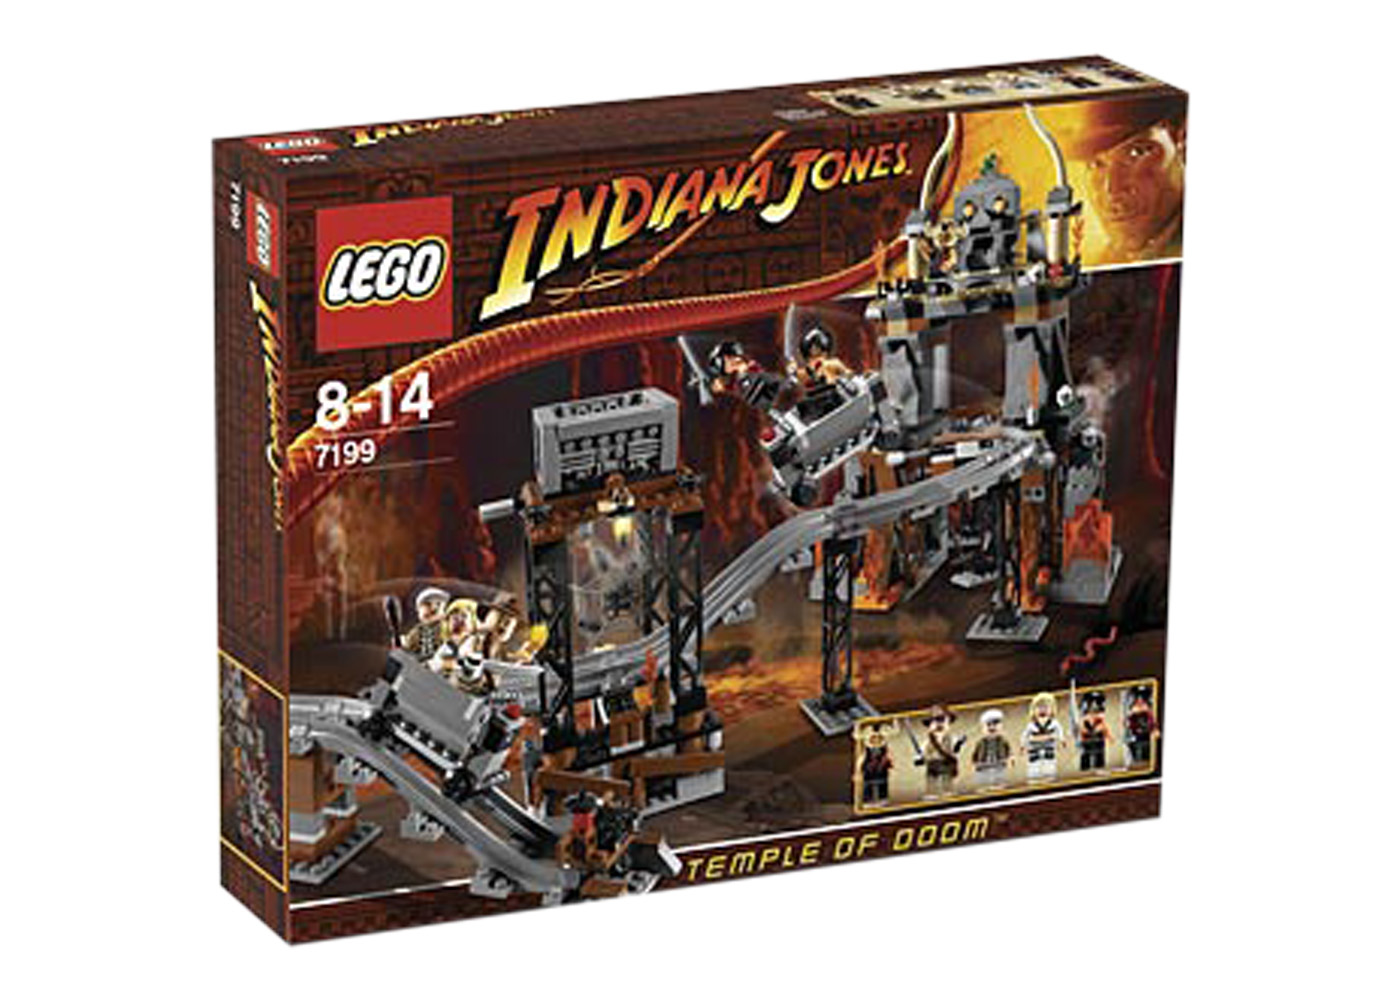 LEGO Indiana Jones The Temple of Doom Set 7199 - US